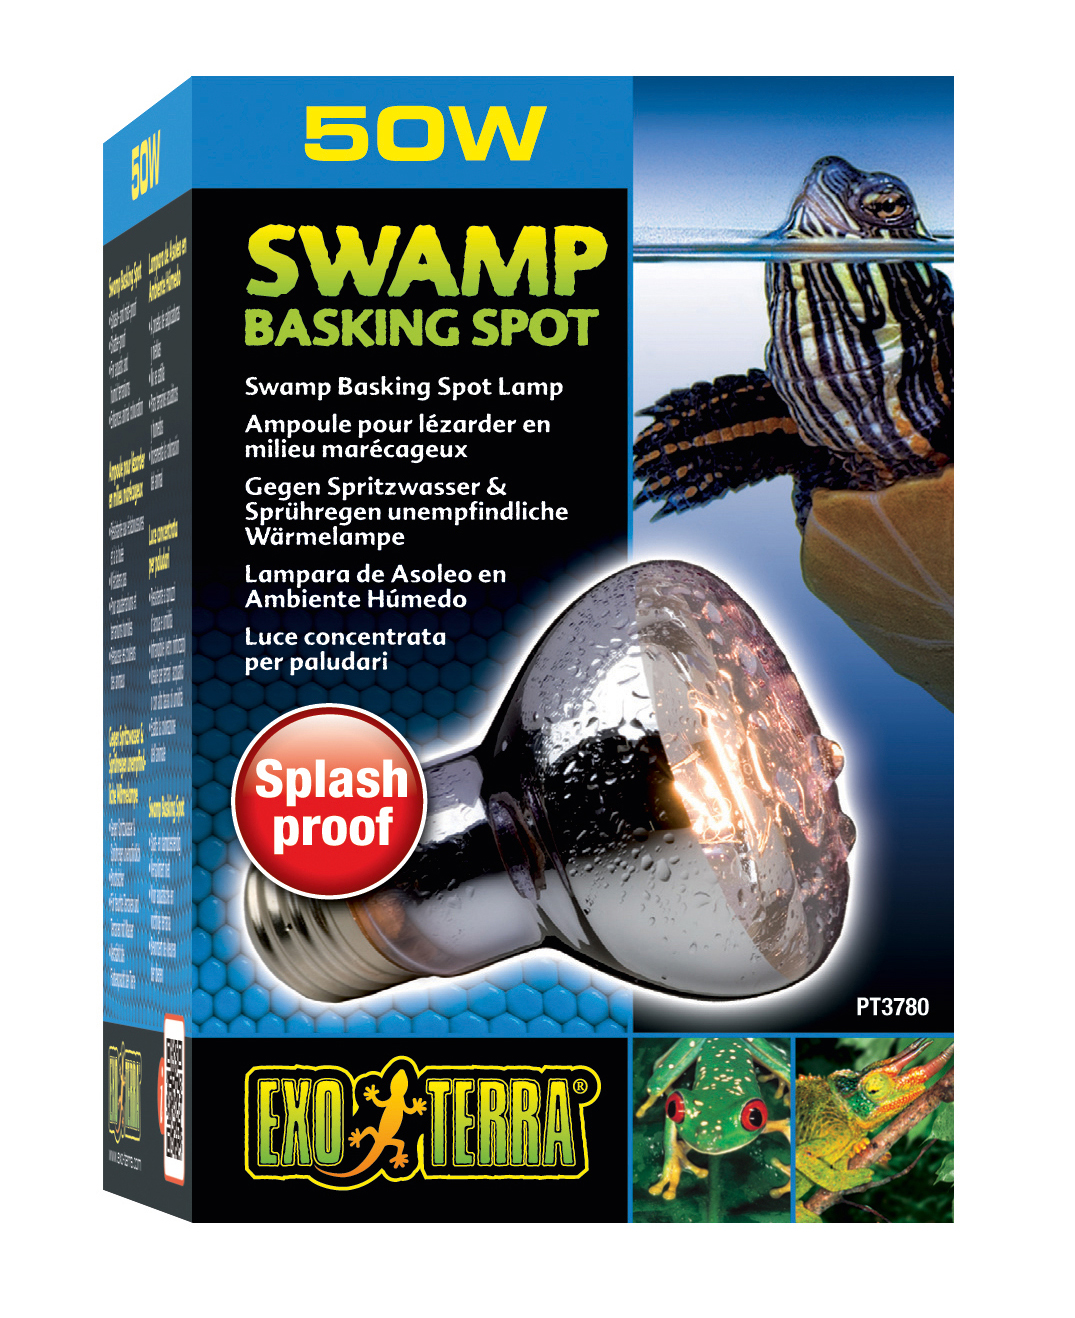 Ex swamp basking spot spatwaterdicht - <Product shot>